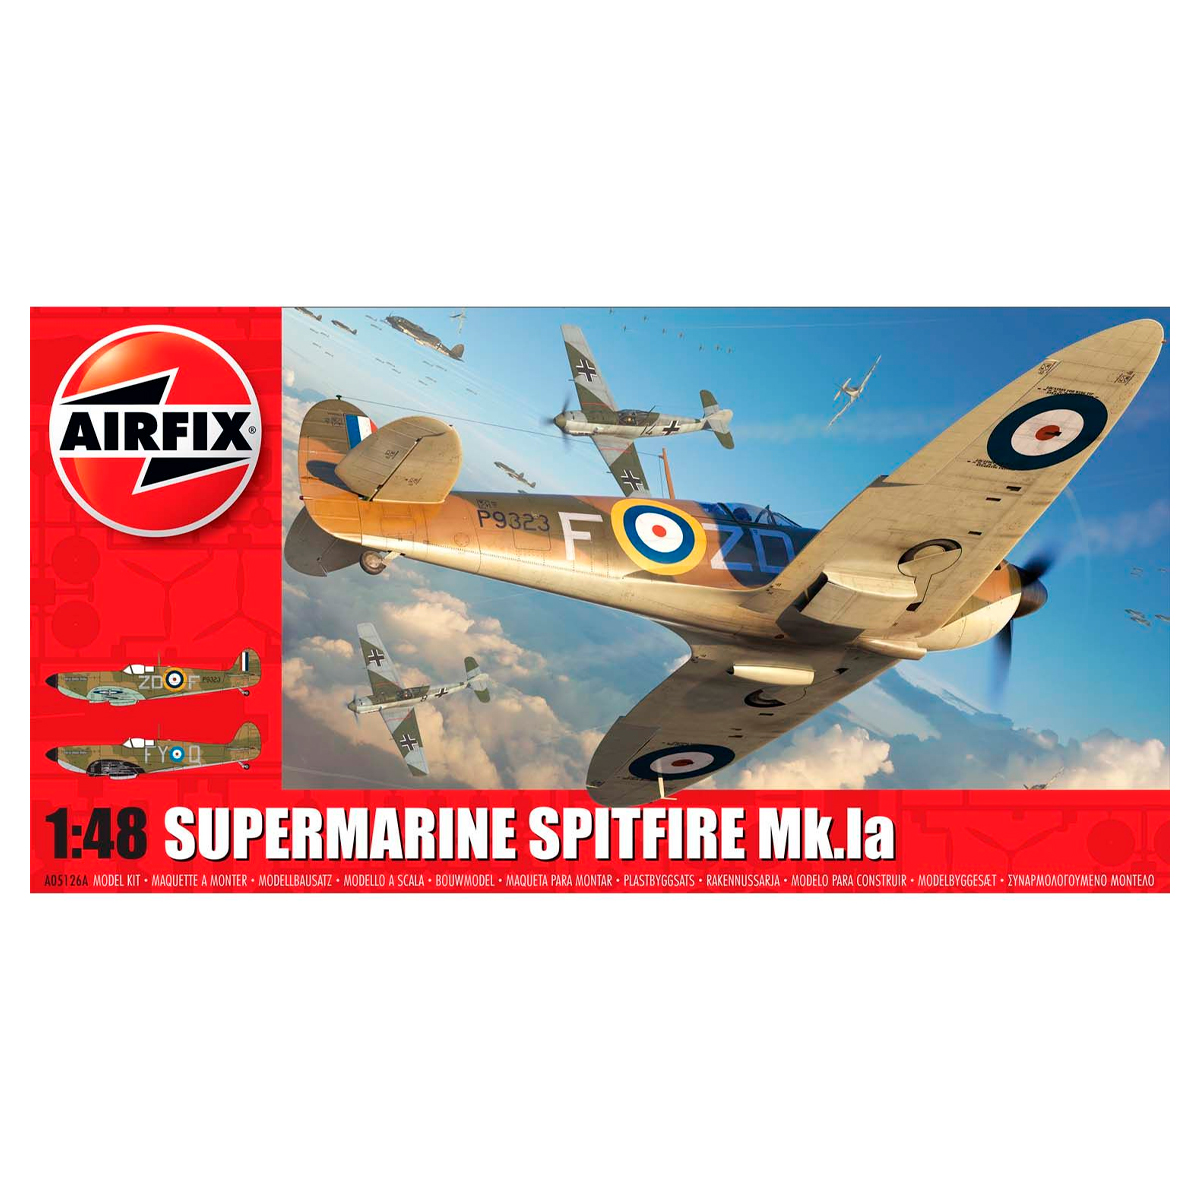 Supermarine Spitfire Mk.1 a 1/48